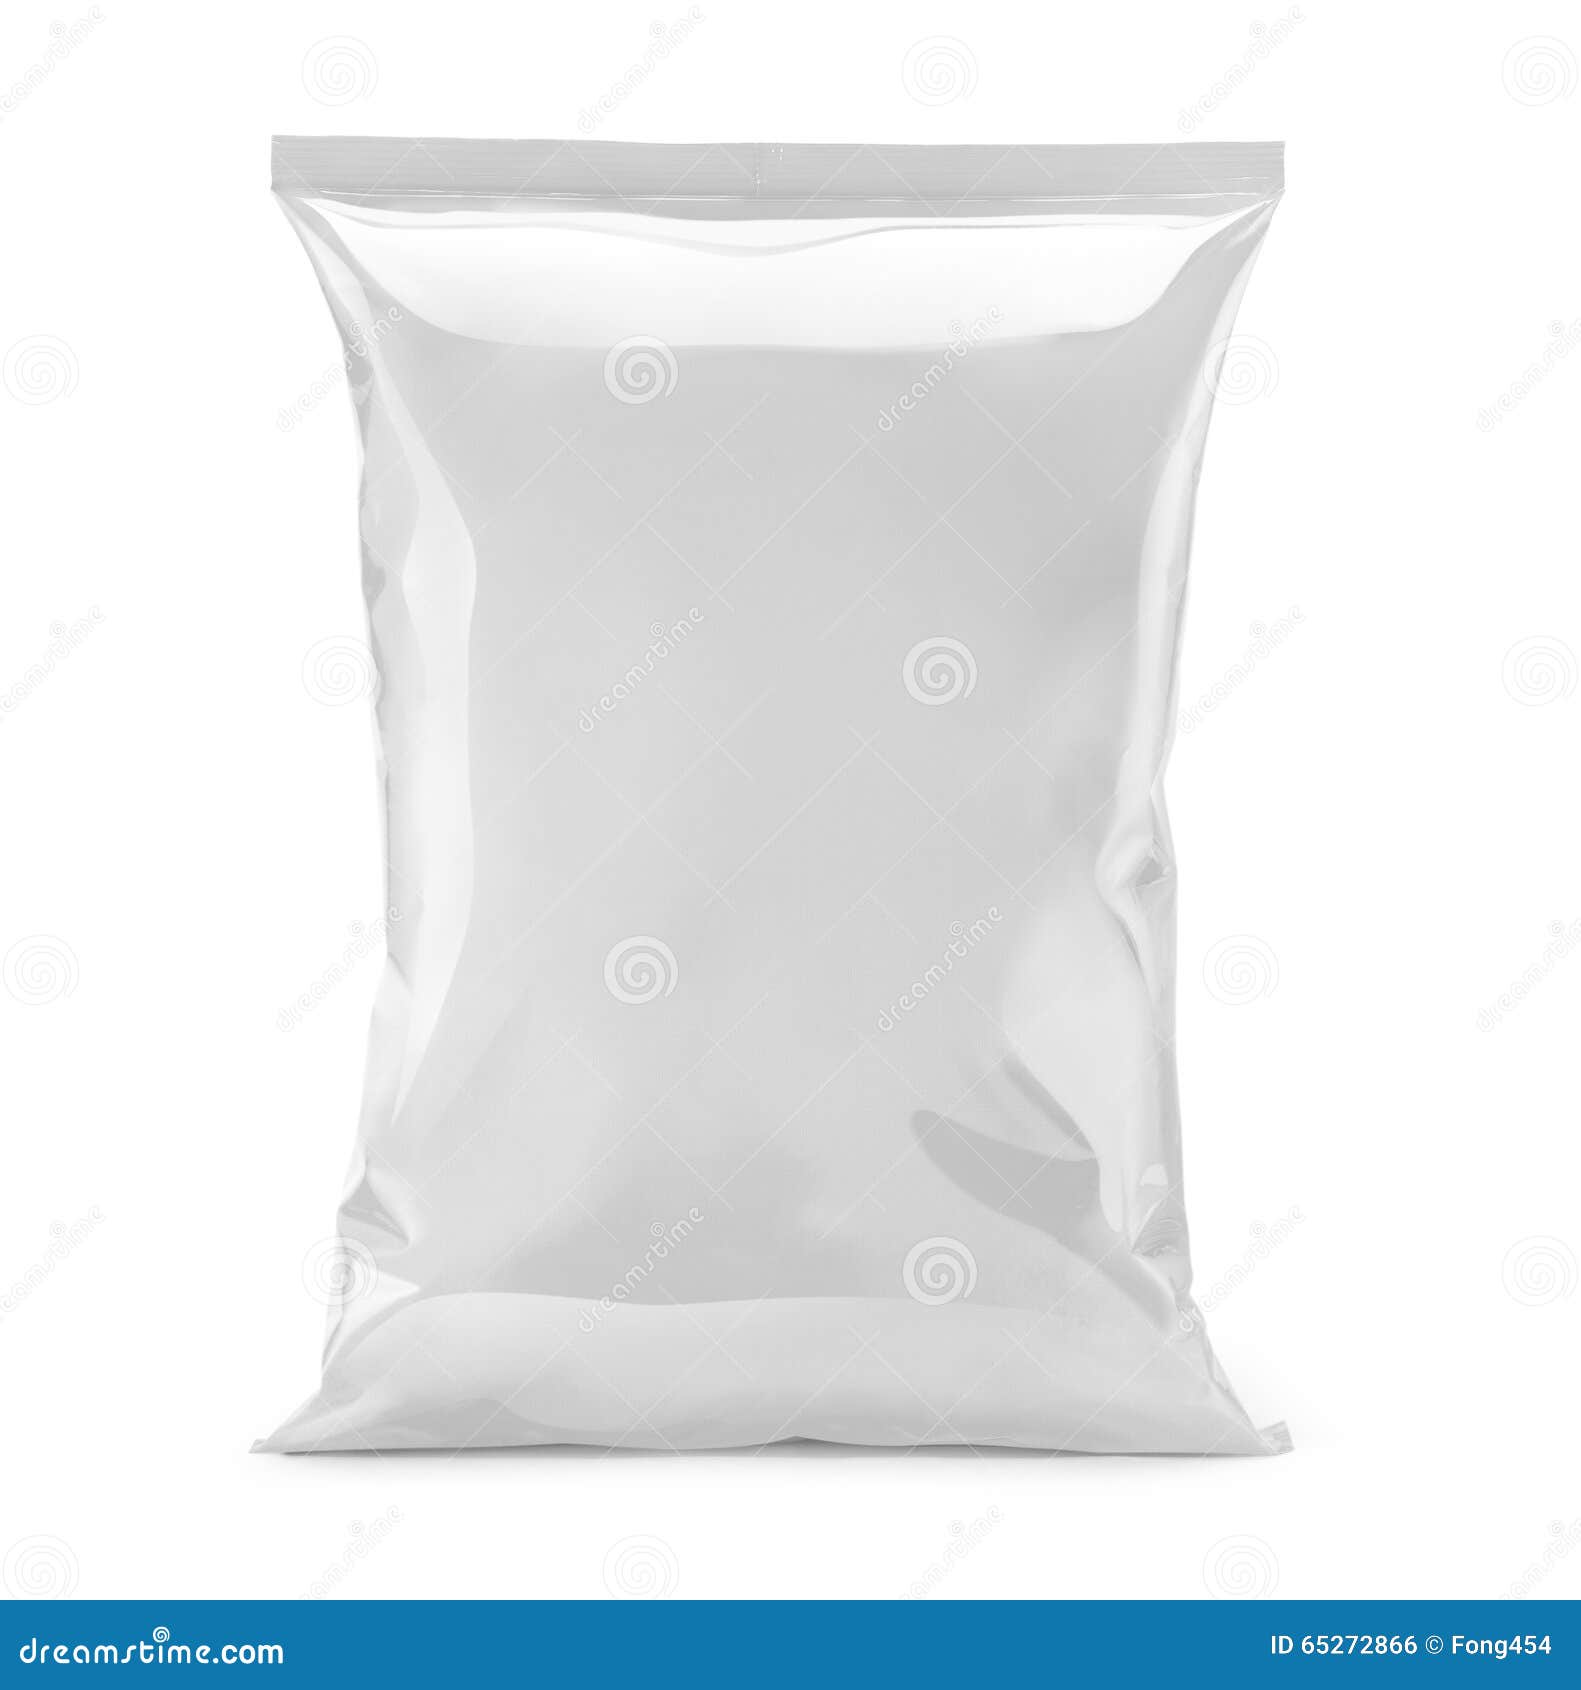 blank or white plastic bag snack packaging  on white